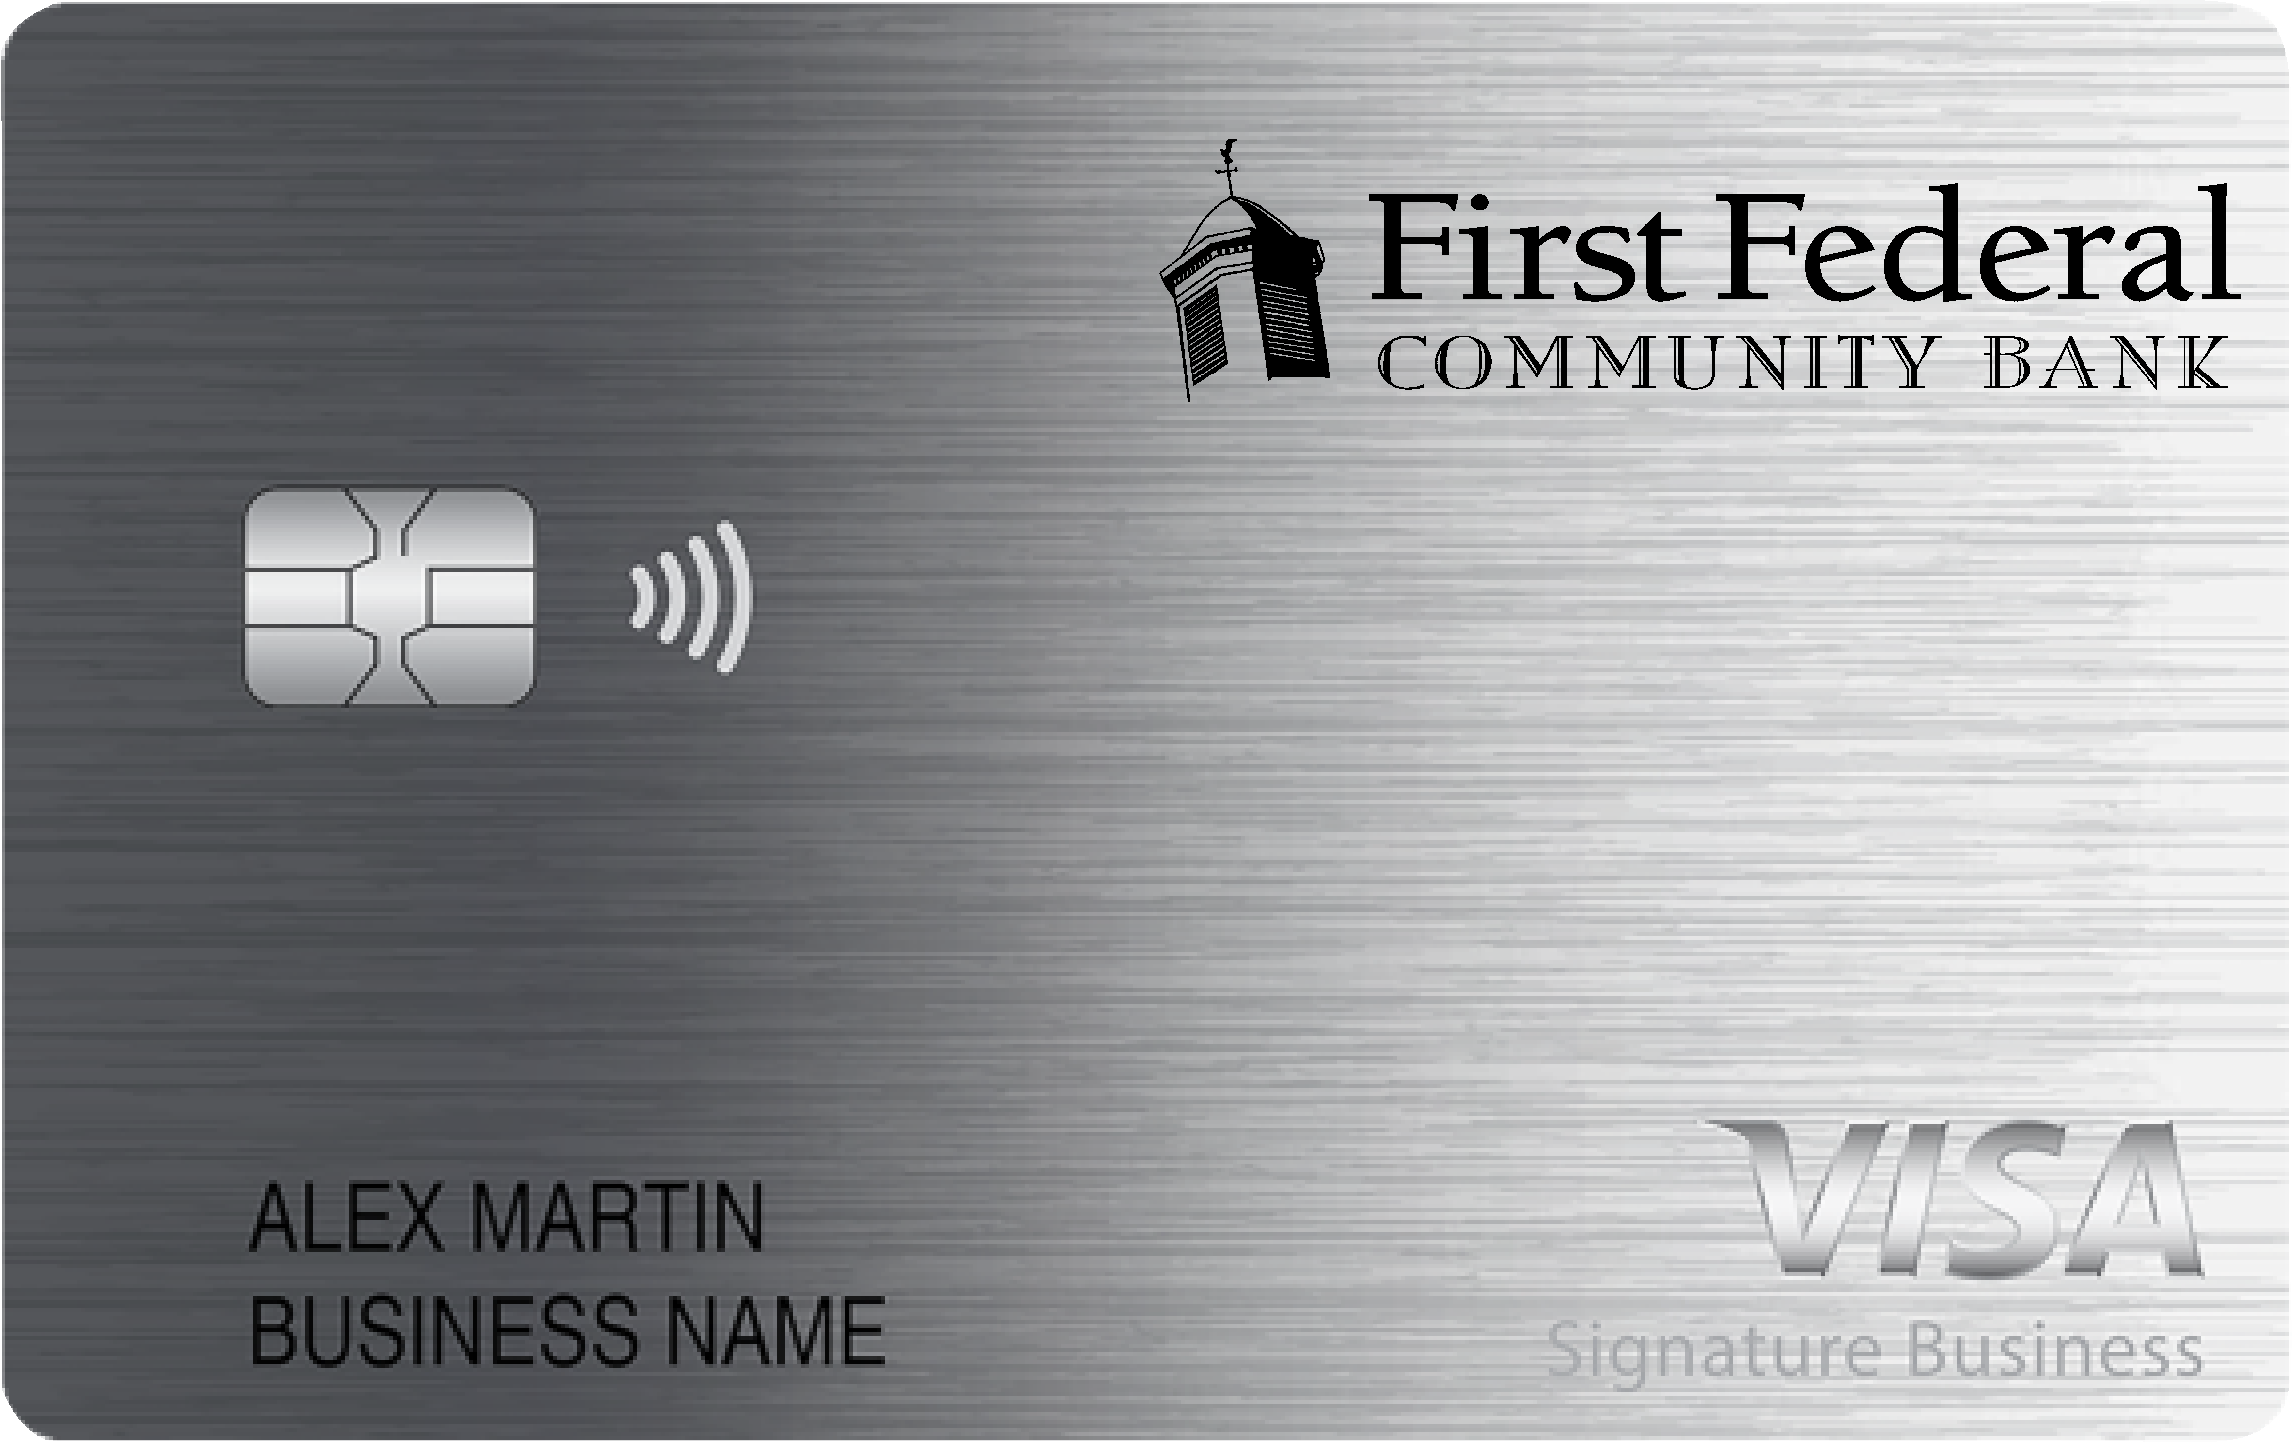 First Federal Community Bank Smart Business Rewards Card